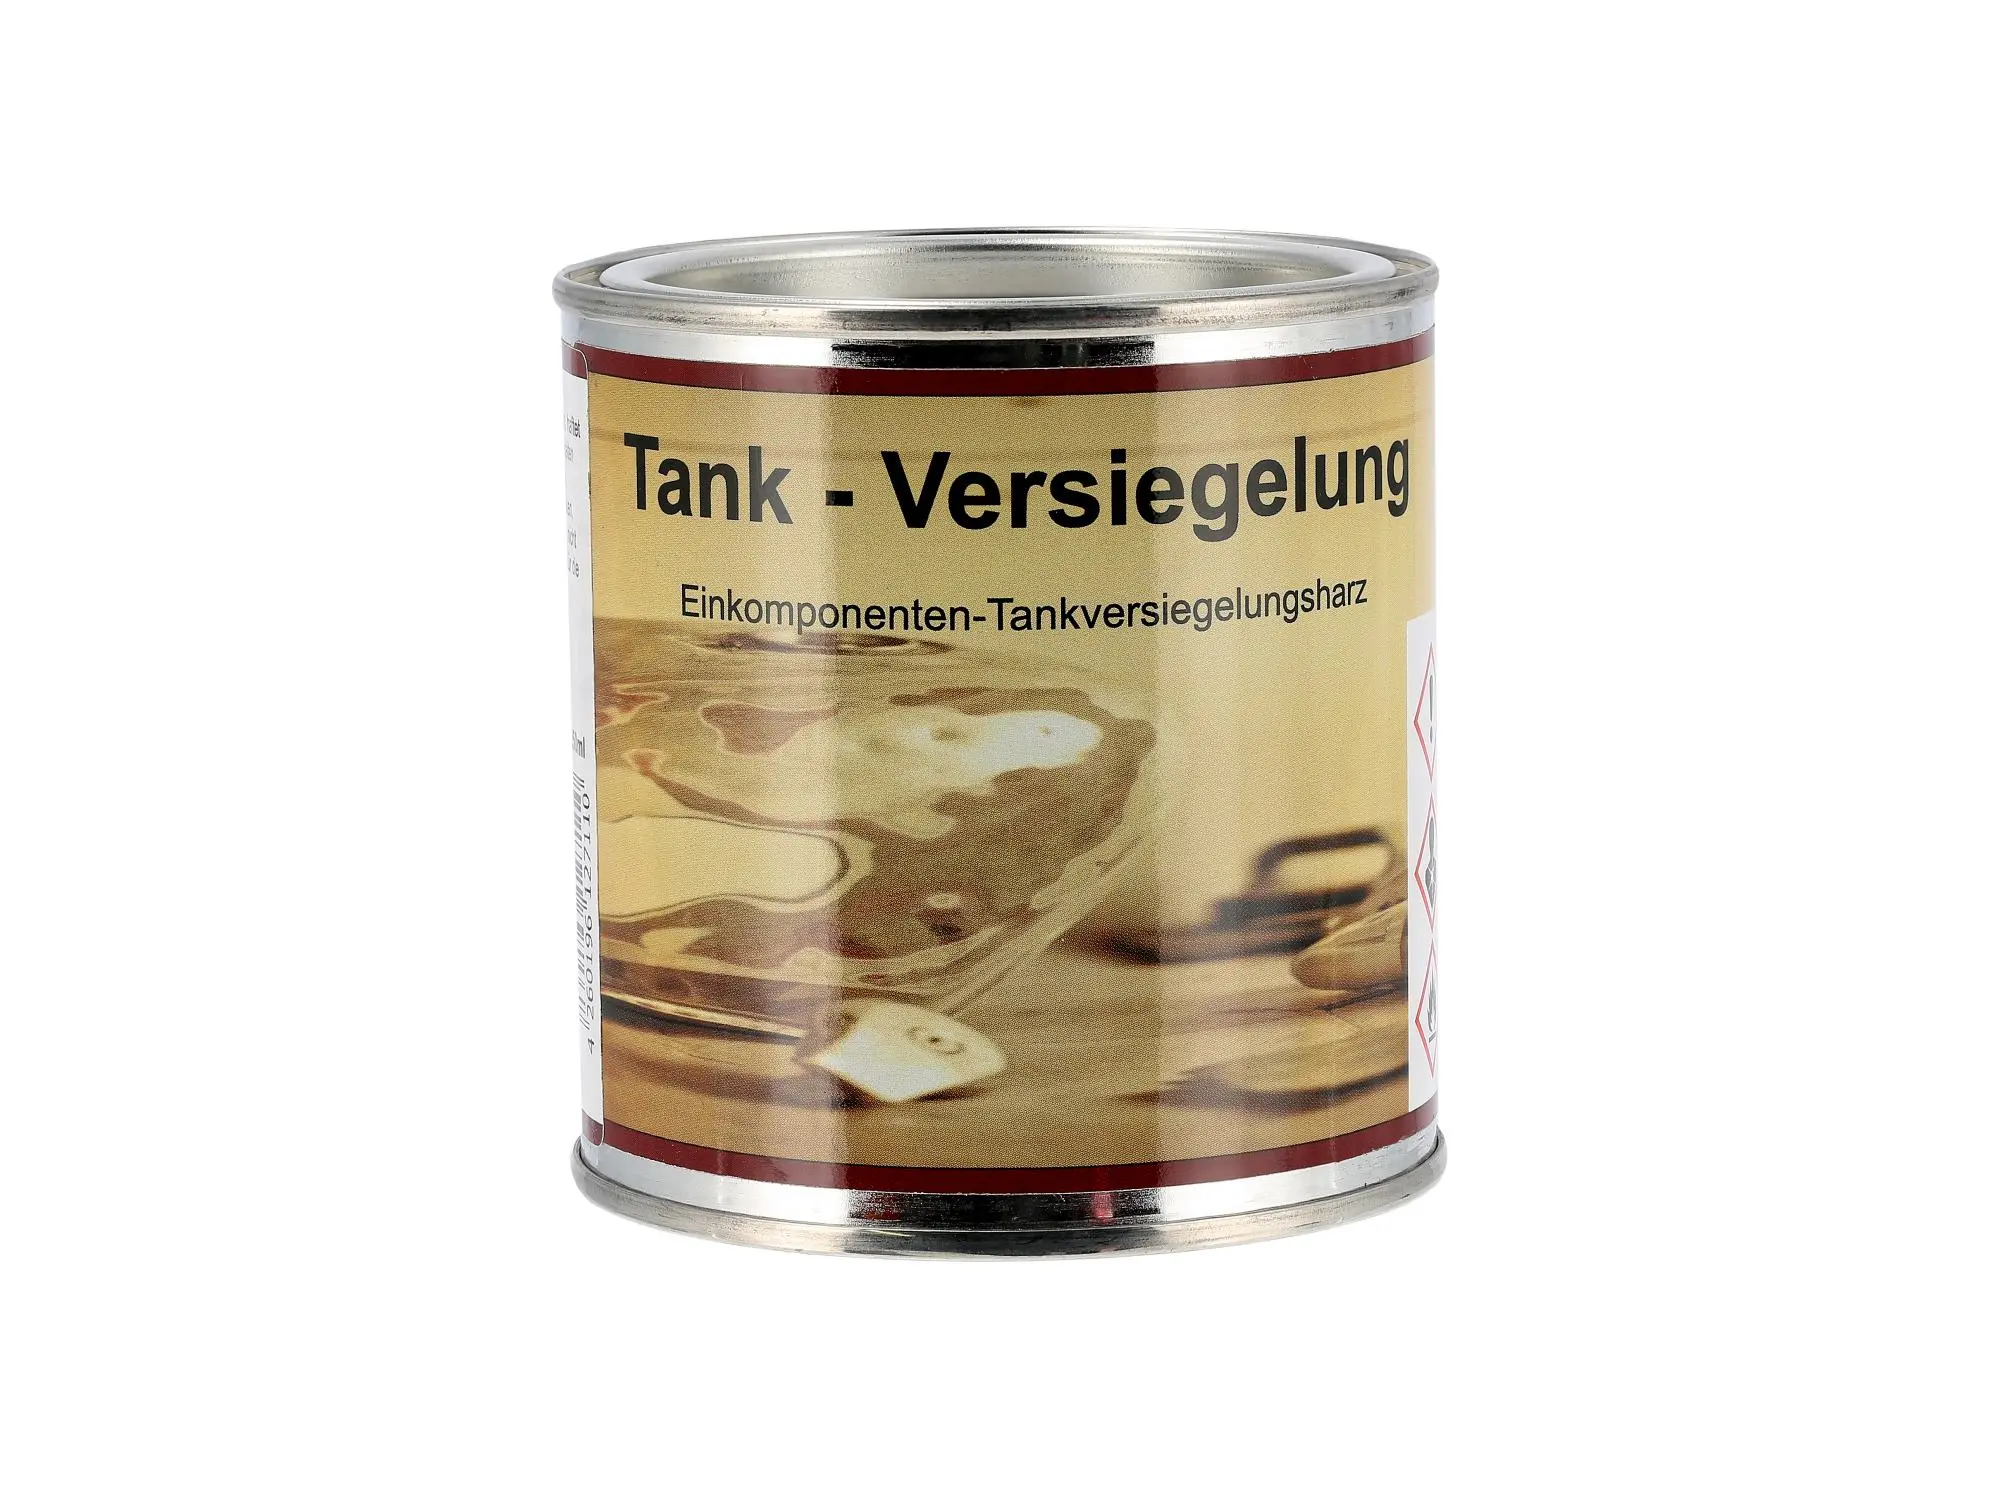 Tankversiegelung für ca. 1-2 Tanks, 1-teilig - 250ml, Art.-Nr.: 10057102 - Bild 1